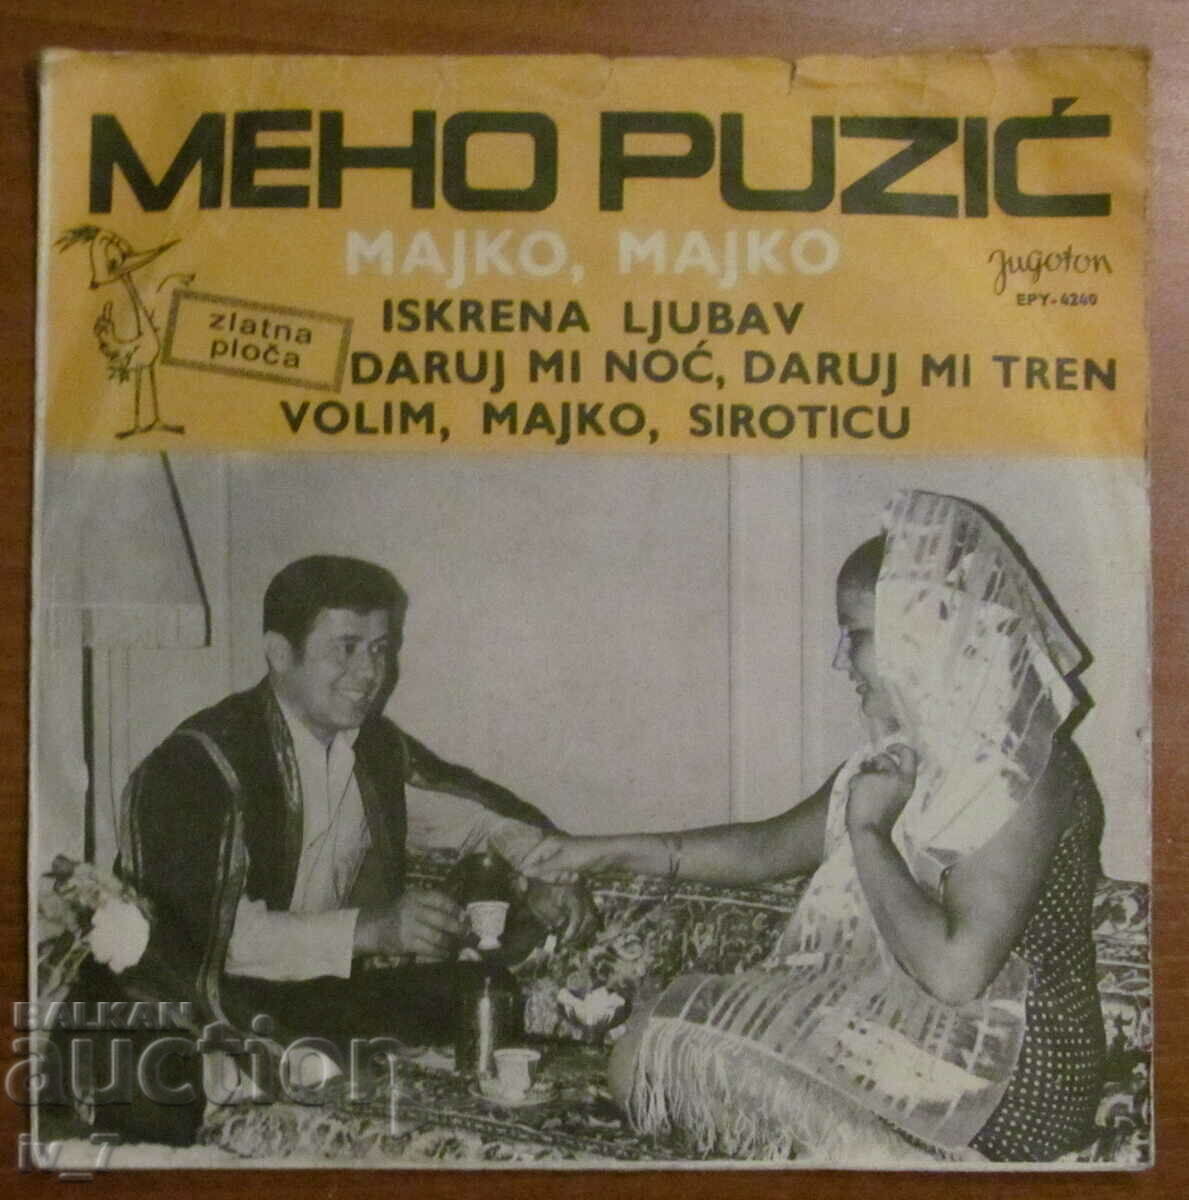 RECORD - MEHO PUZICH, μικρού σχήματος